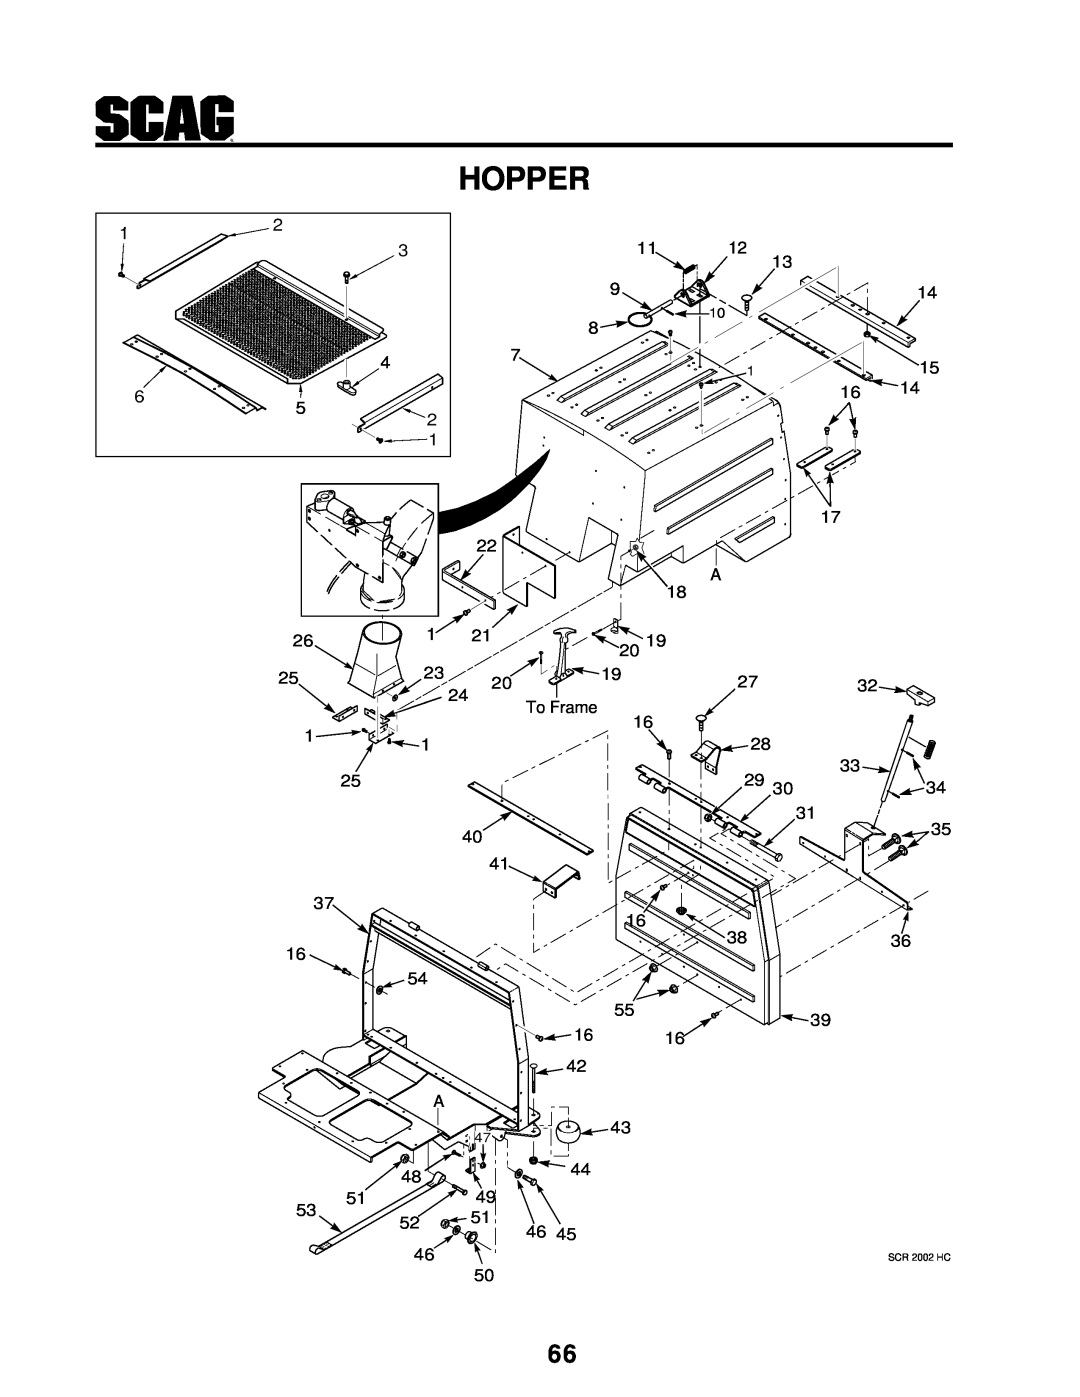 MB QUART manual Hopper, To Frame, SCR 2002 HC 